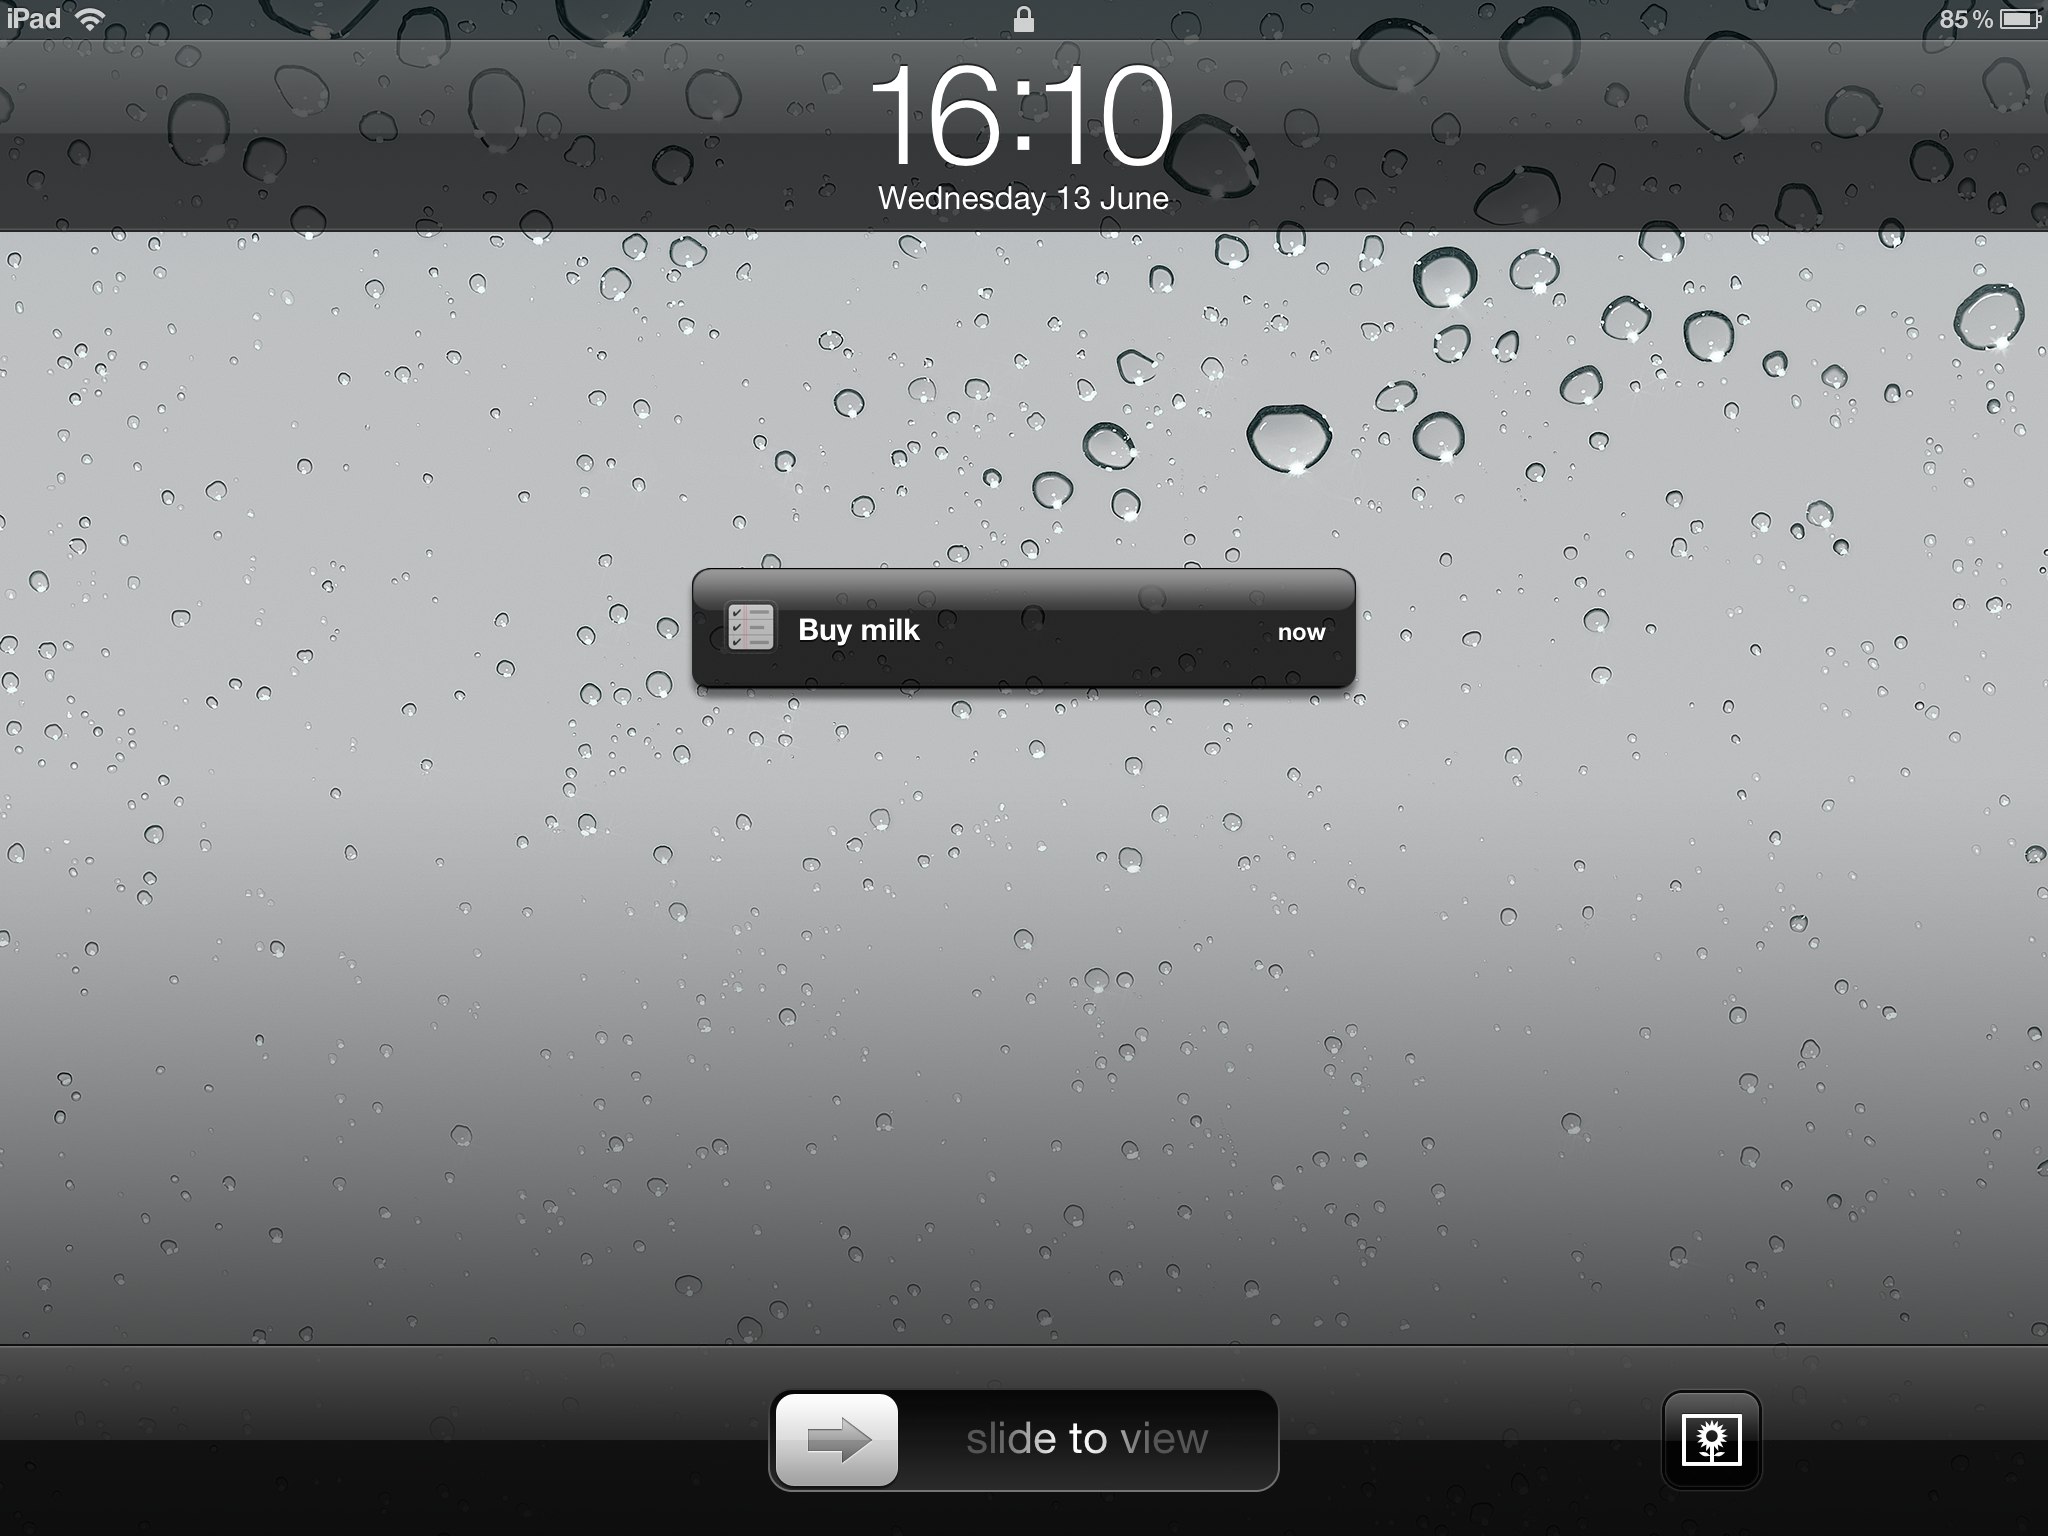 iPad Reminders App